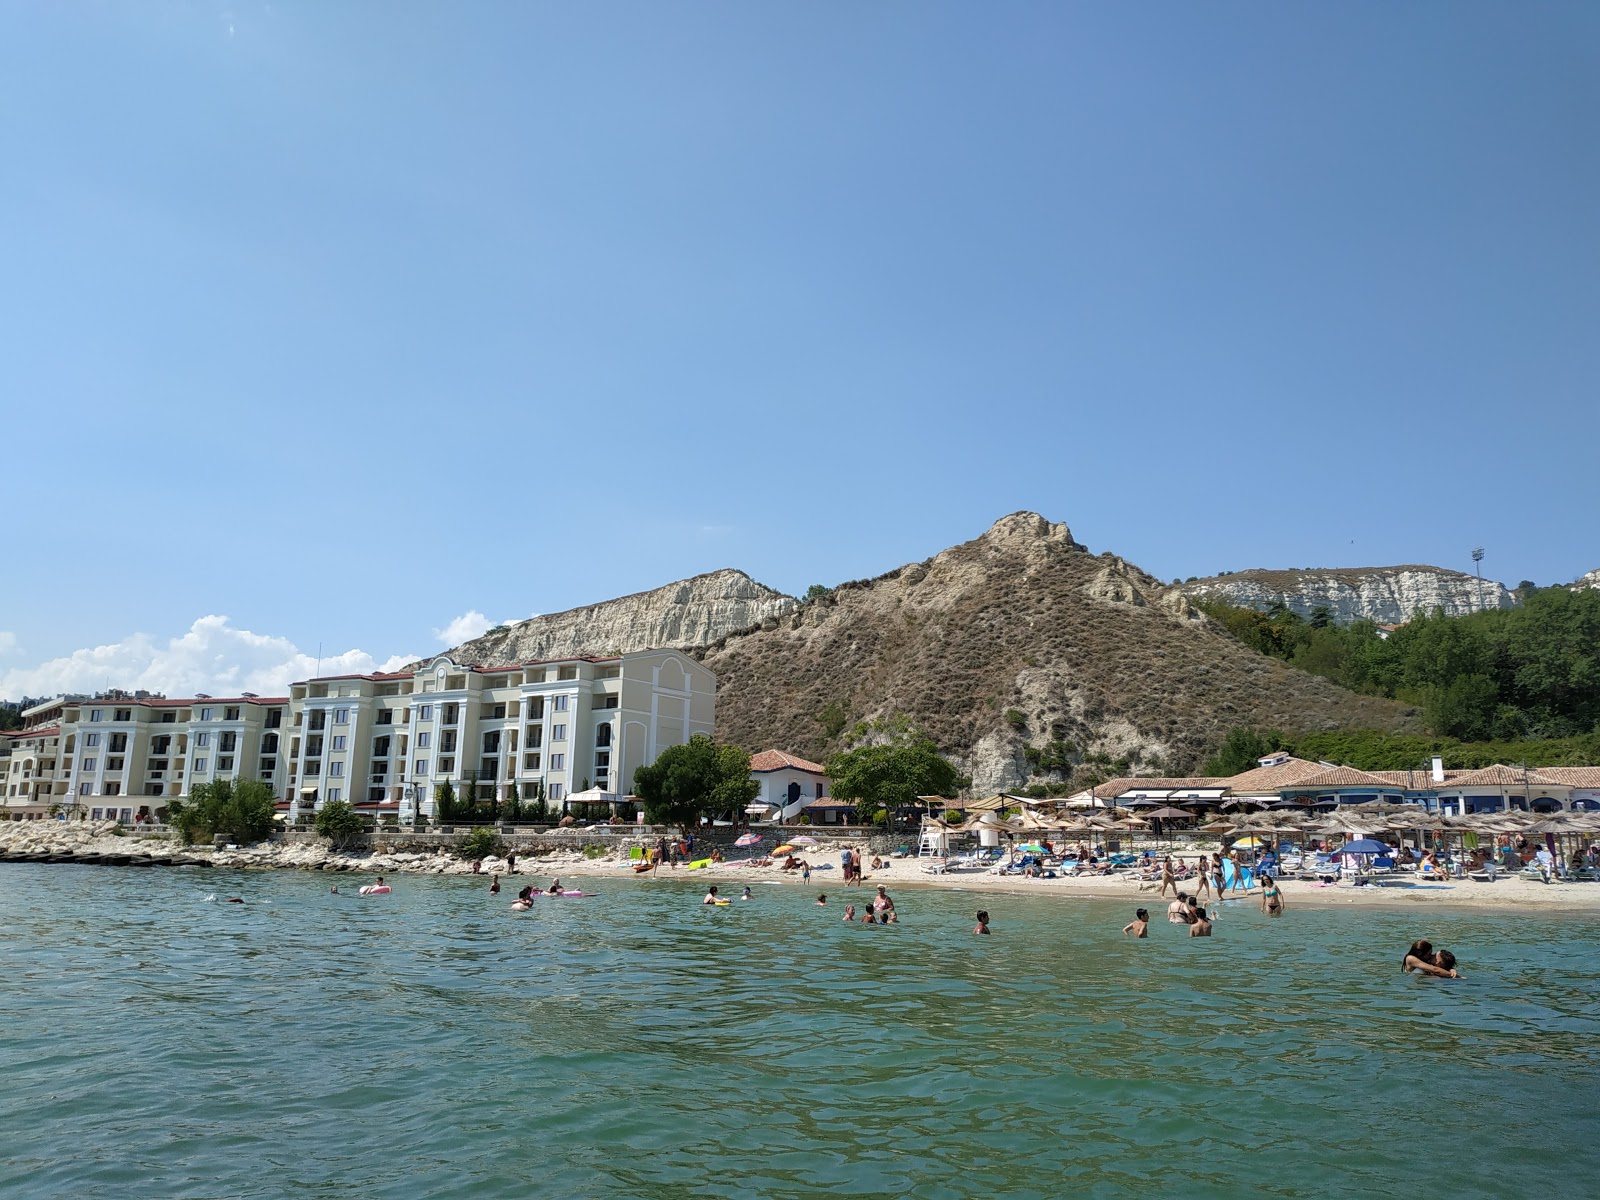 Foto av Nomad beach omgiven av klippor